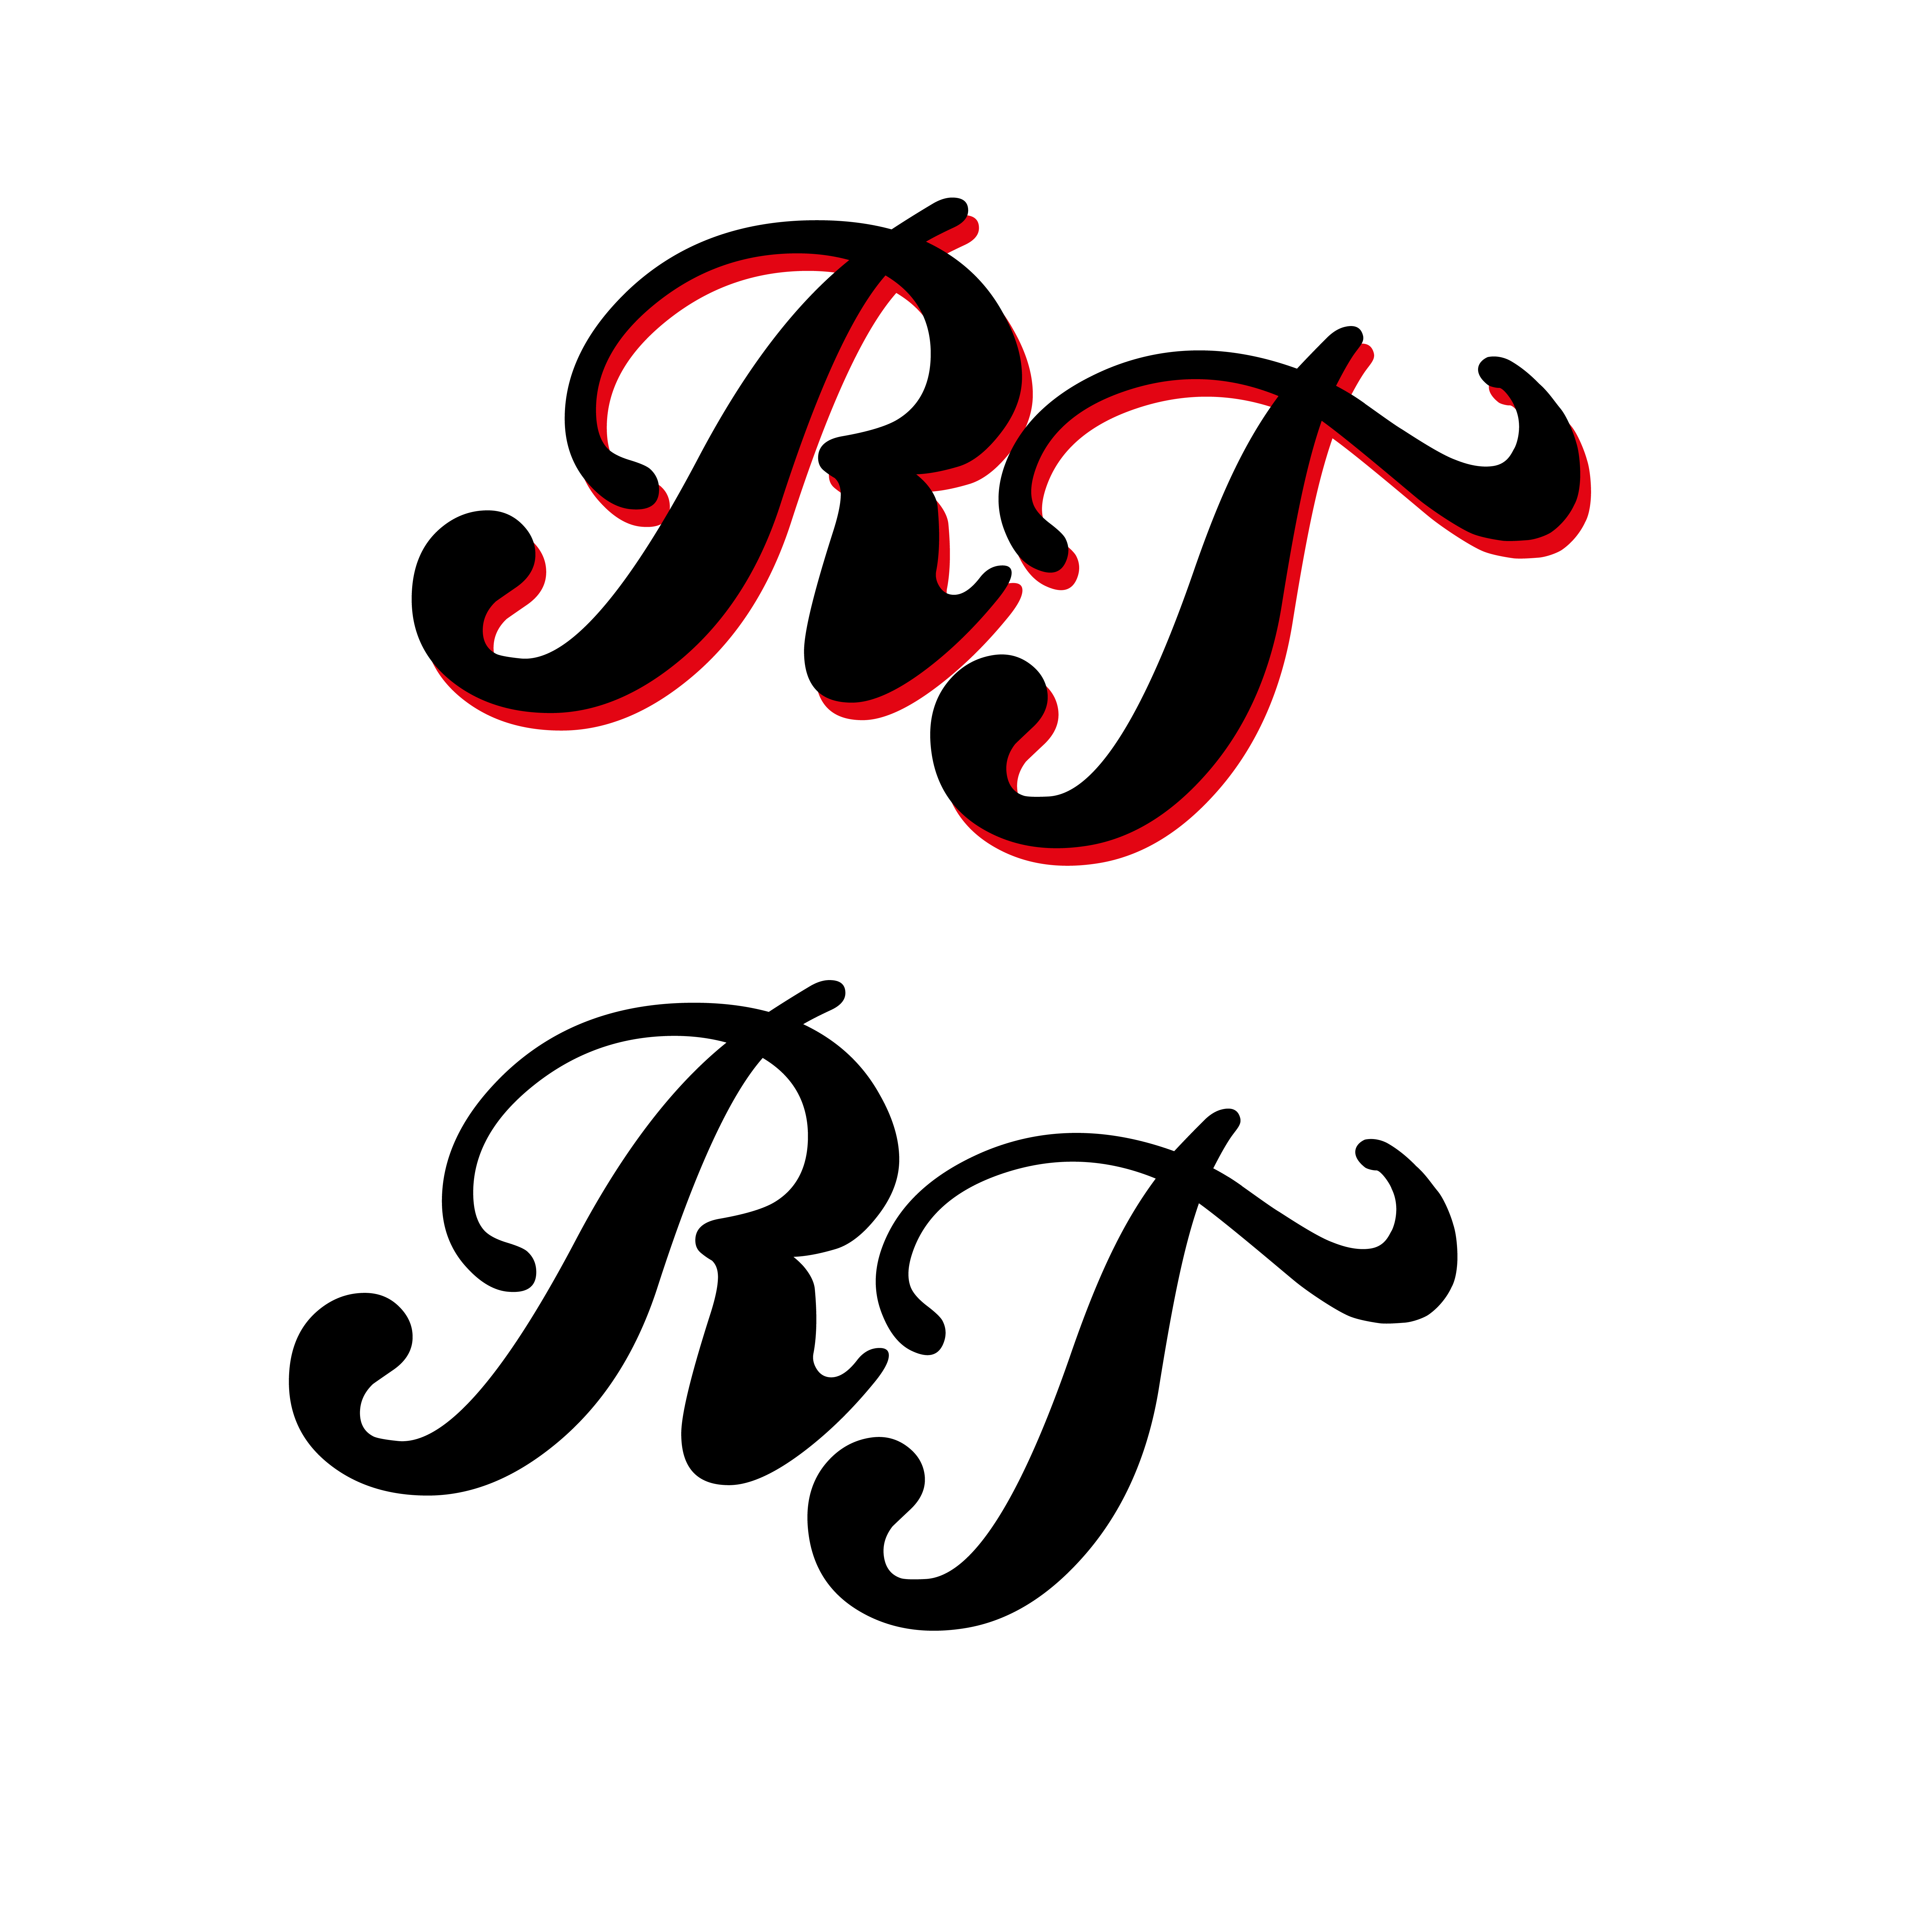 rjの名前の壁紙,フォント,テキスト,書道,アート,グラフィックス